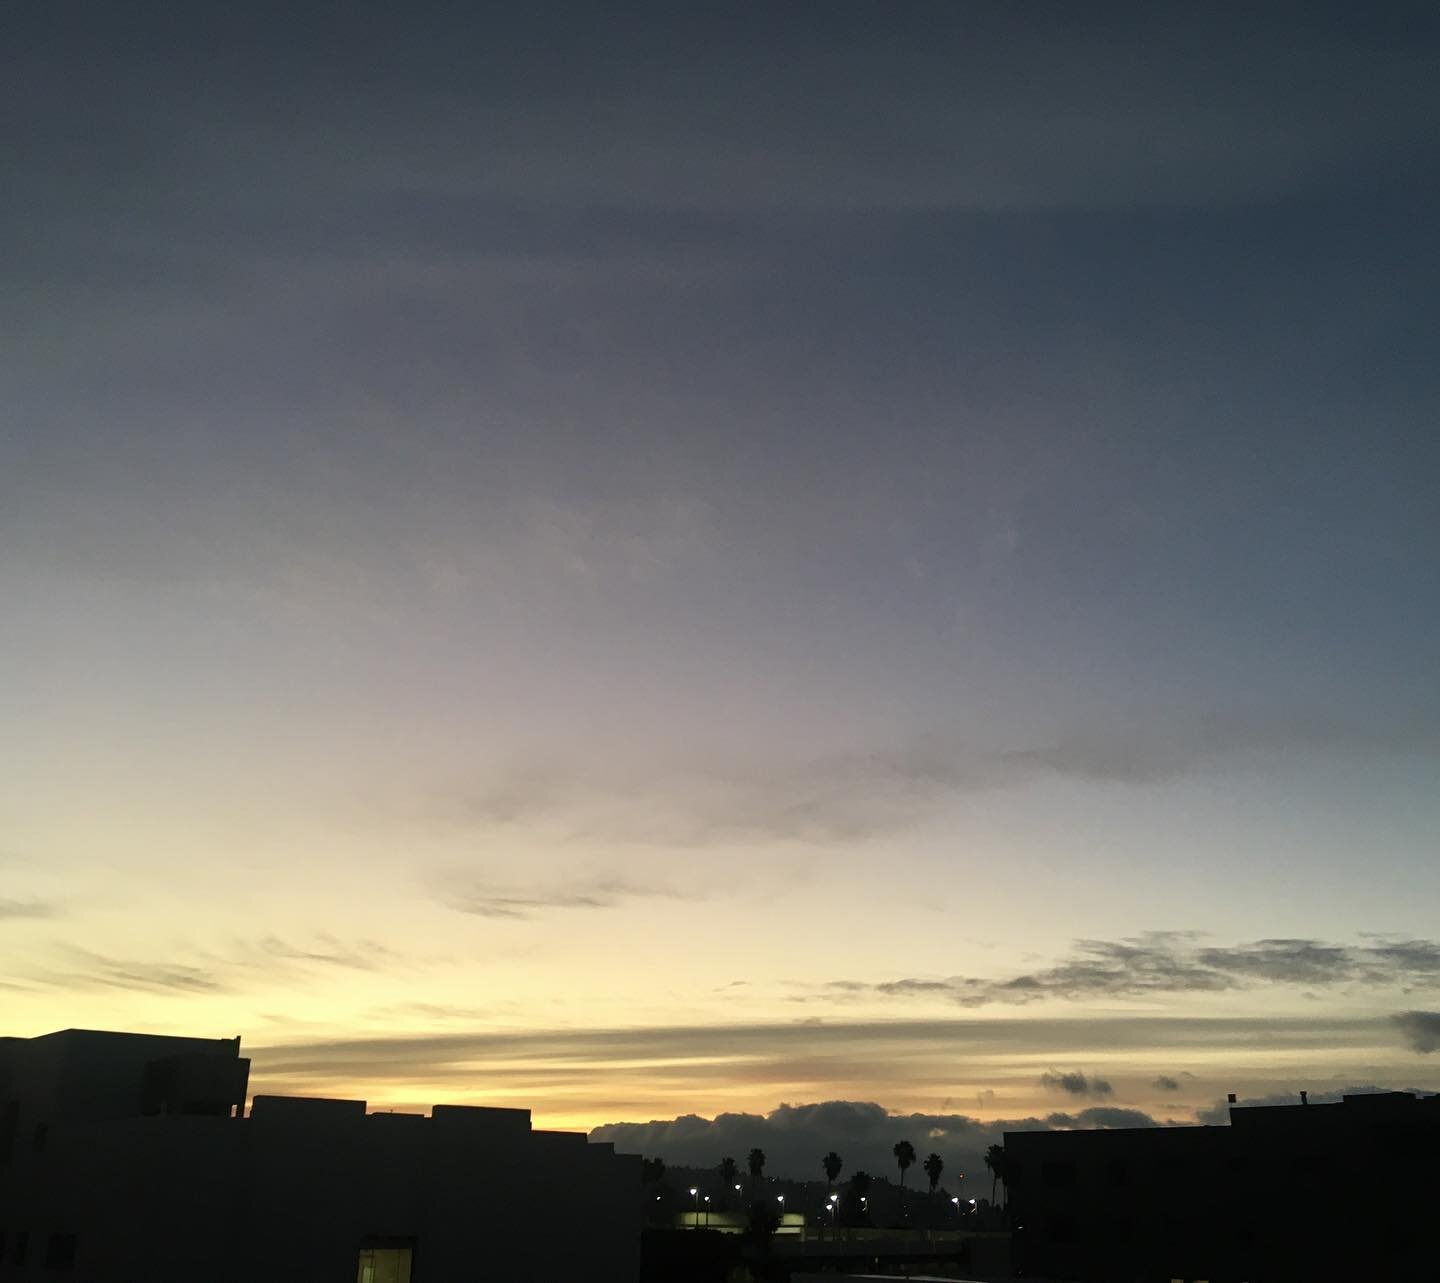 sunrise mornings (oh pre delight savings daylight I miss you) | January 13, 2021